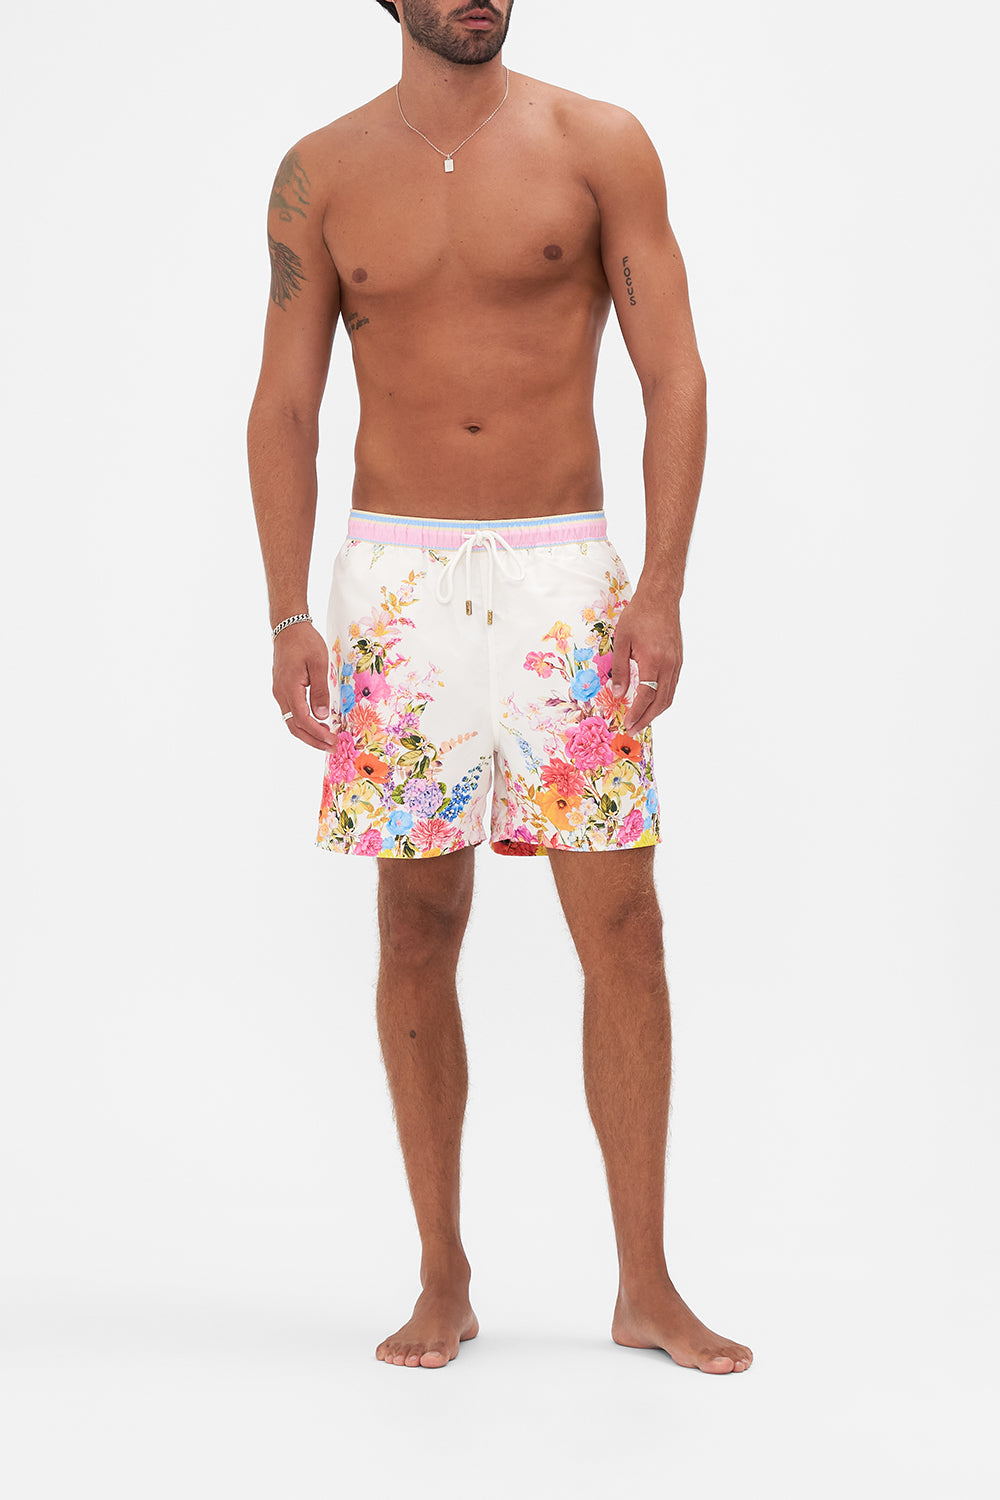 CAMILLA mens floral print board shorts in Sunlight Symphony print